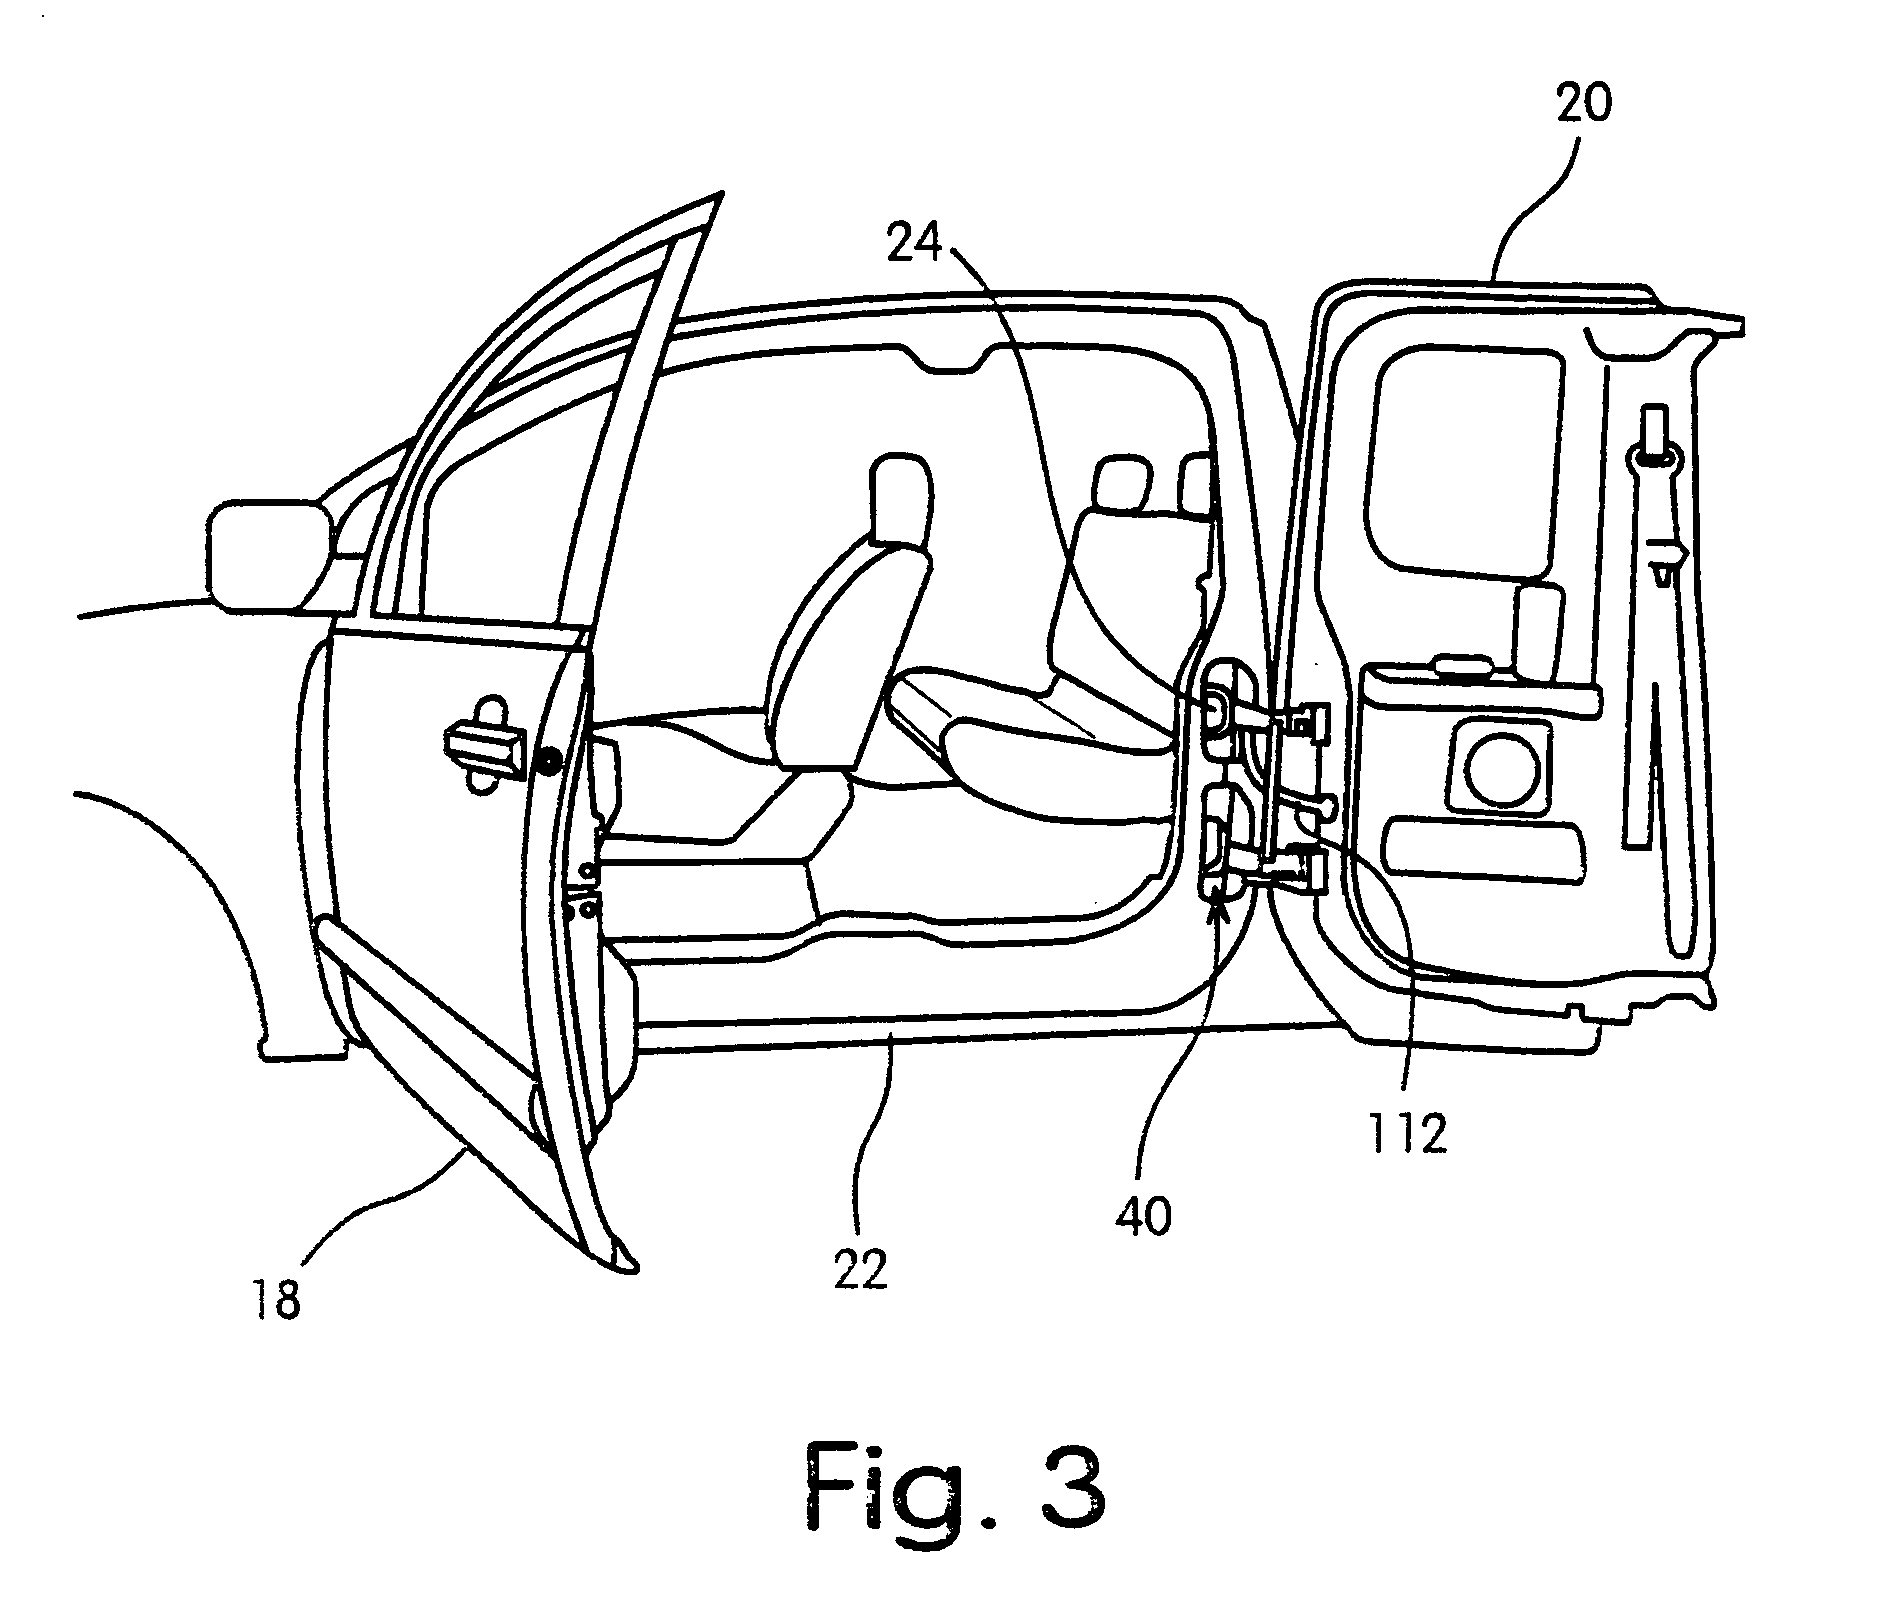 Vehicle door hinge assembly